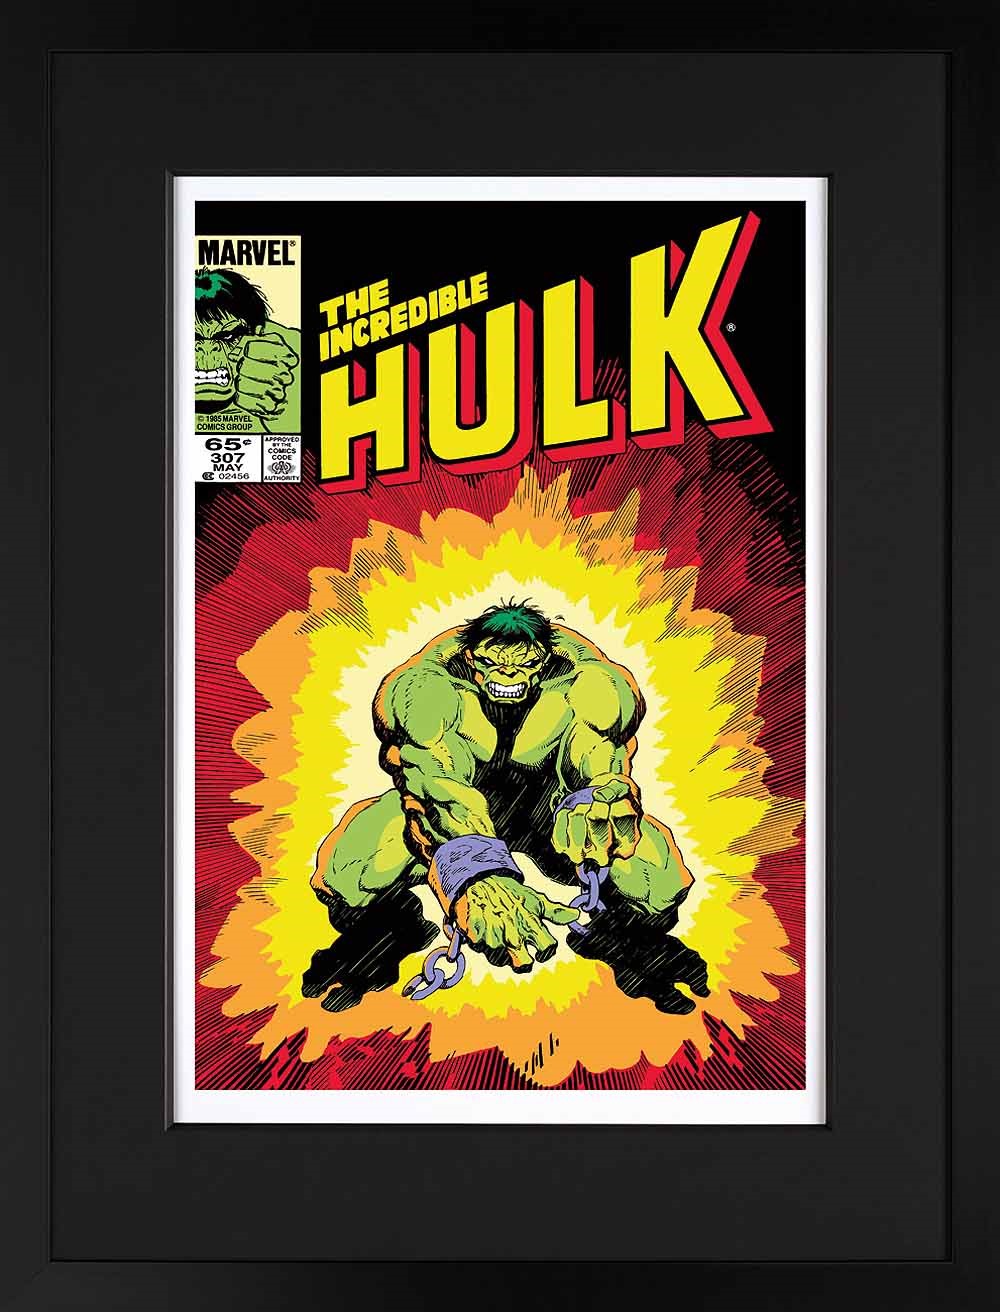 The Incredible Hulk by Marvel Comics - Stan Lee, Marvel | Comic | Nostalgic